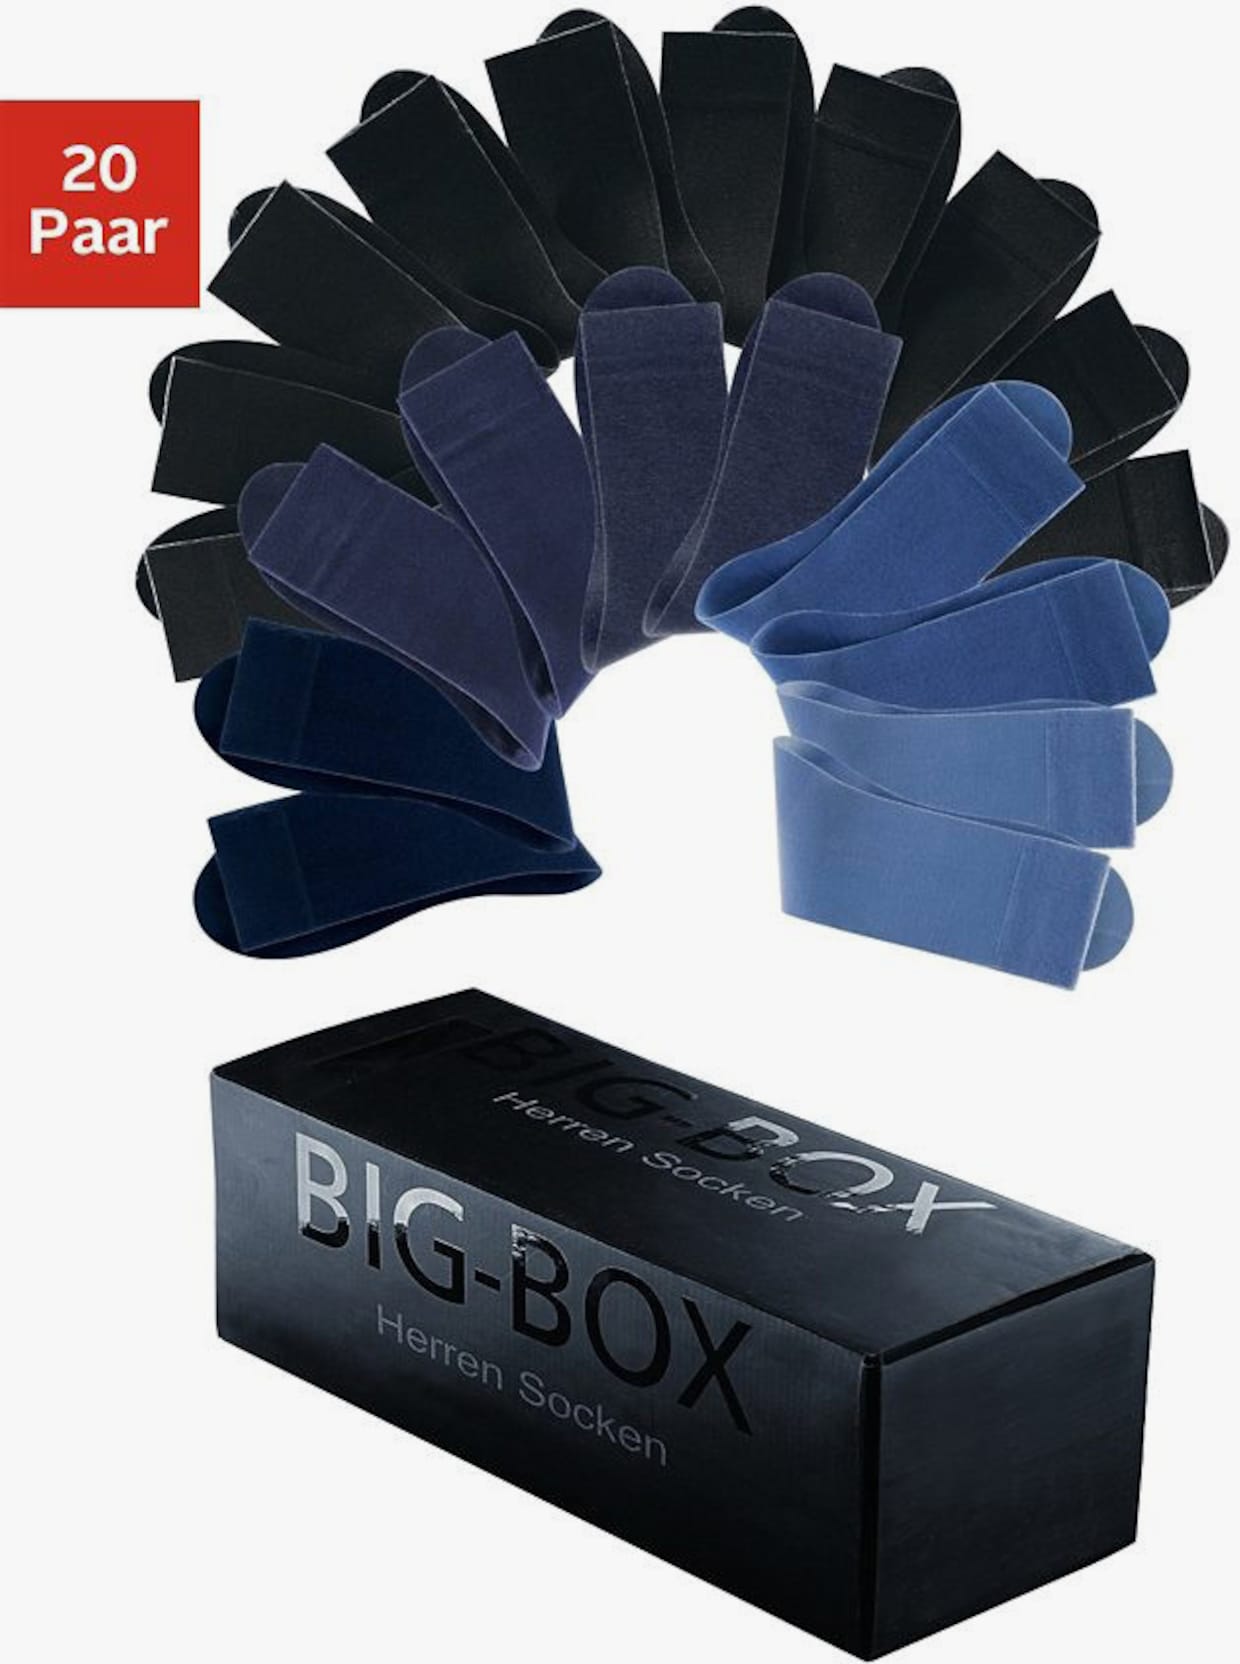 H.I.S Business sokken - 10x zwart, 10x blauw